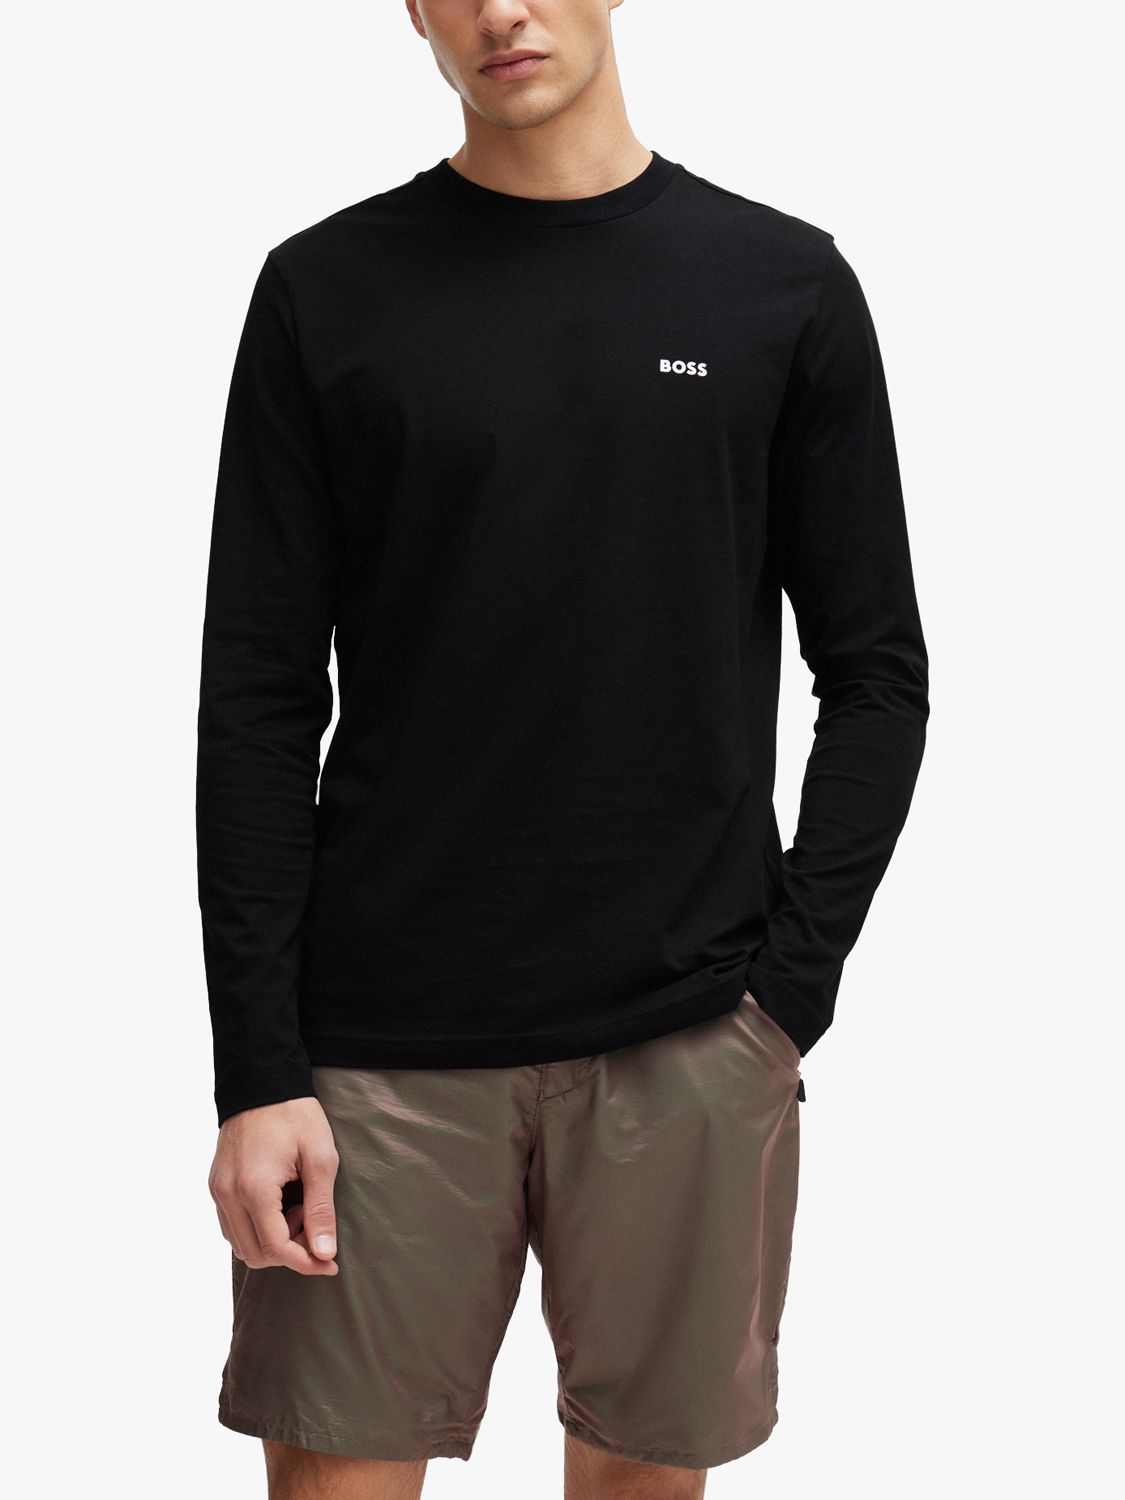 Buy BOSS Long Sleeved Cotton T-Shirt Online at johnlewis.com